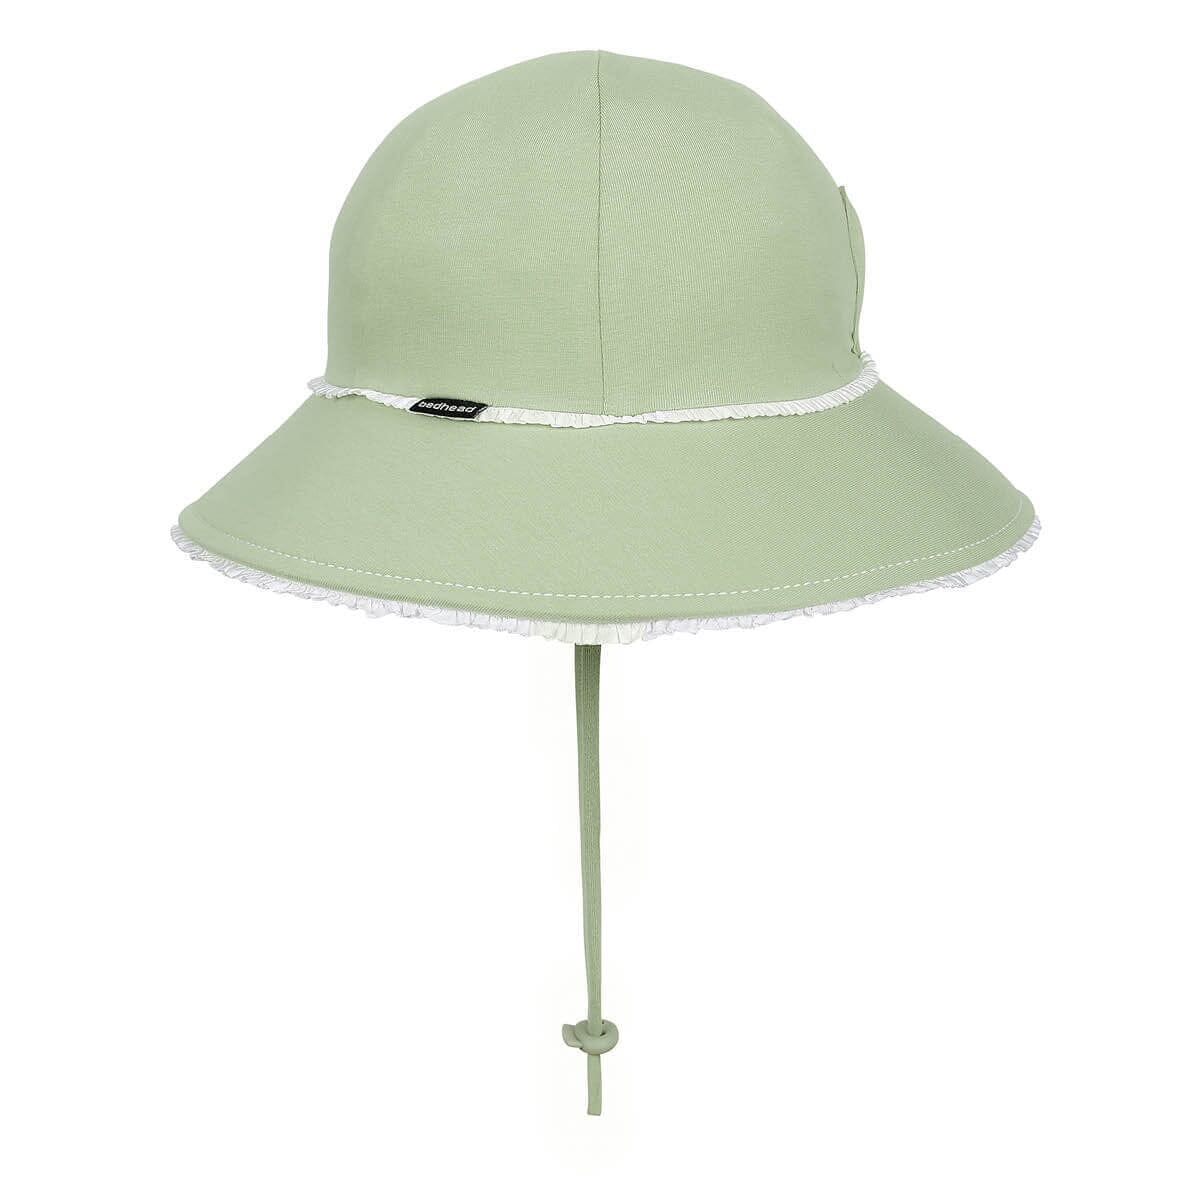 Bedhead - Kids Ponytail Trim Bucket Hat with Strap - Khaki Hats Bedhead 